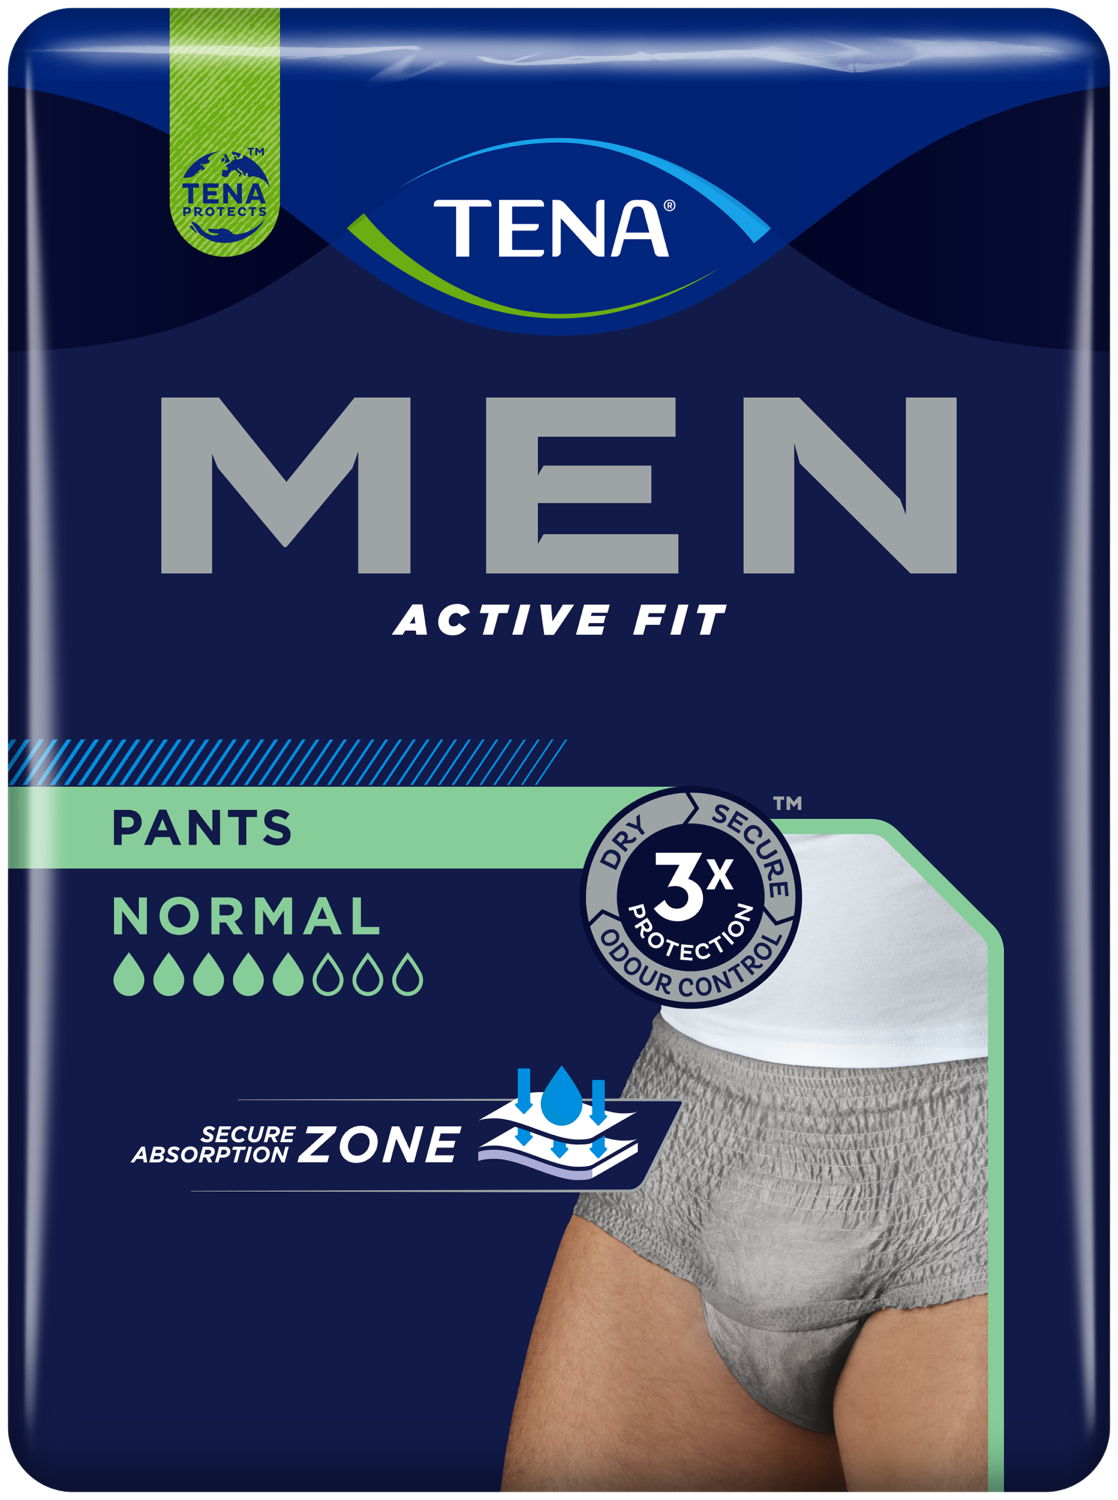 Tena Men Active Fit Pants Normal grau S/M 12 Stück